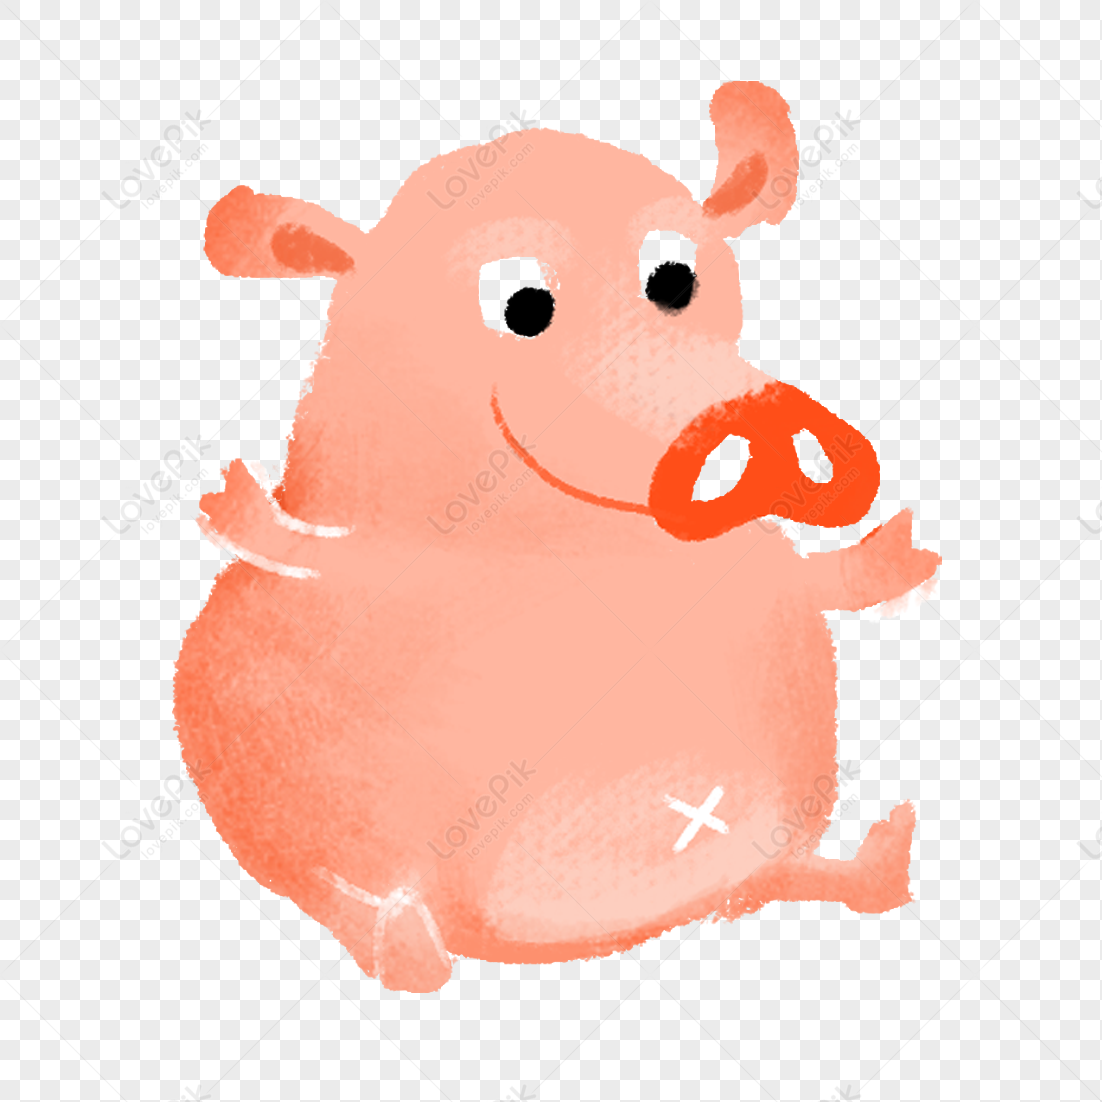 pig-cartoon-pig-cute-pig-pig-pink-png-image-free-download-and